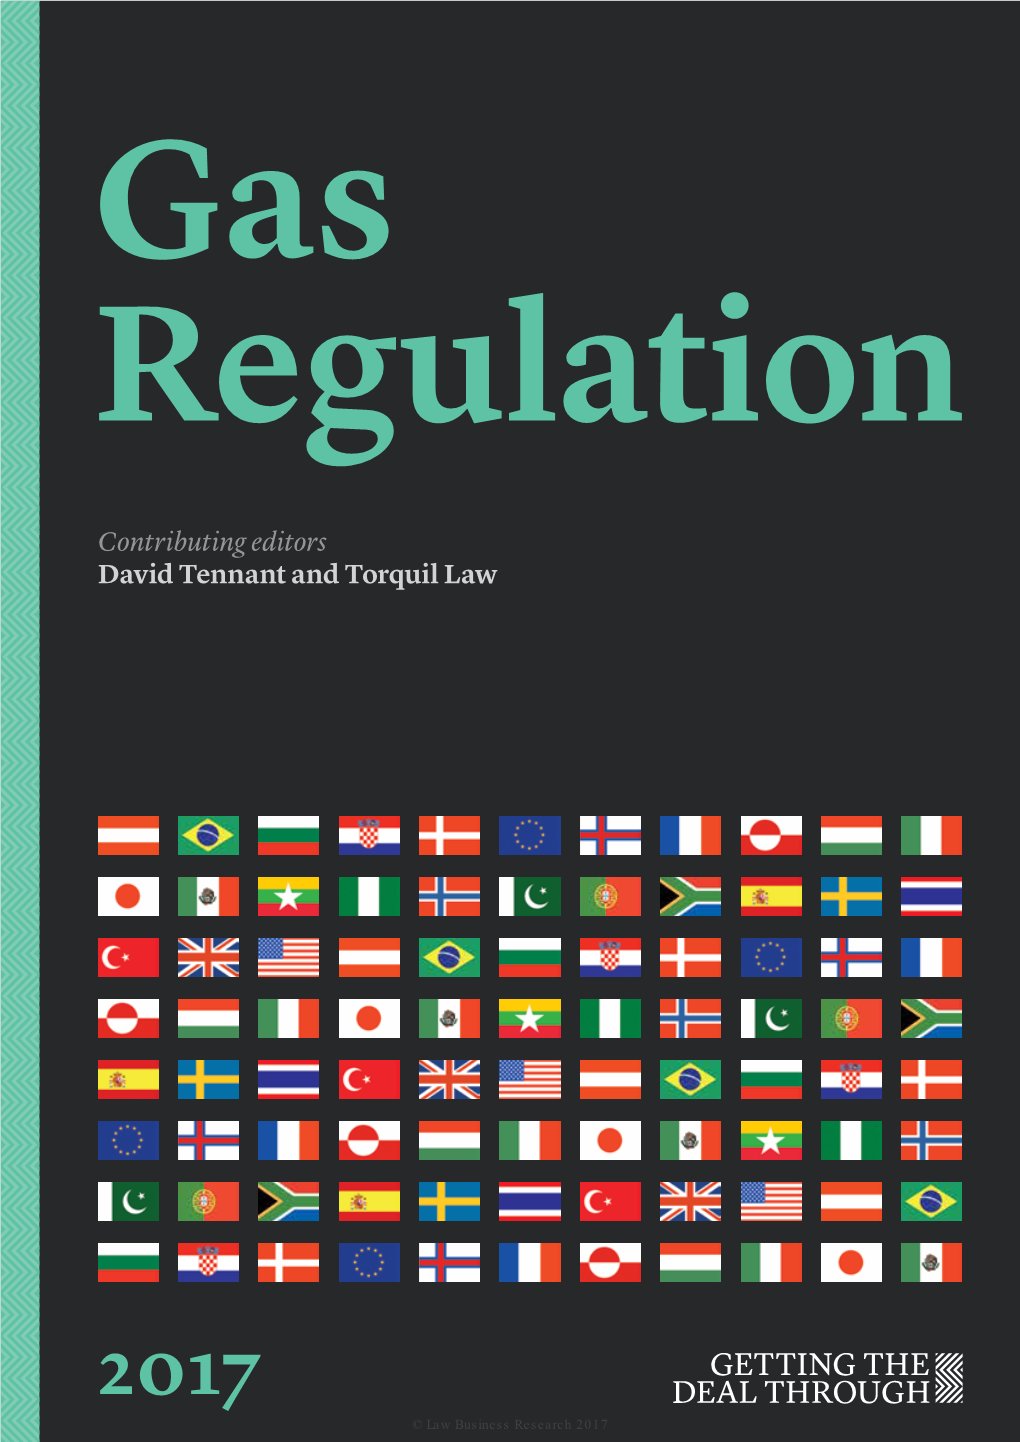 Gas Regulation 2017 Contributing Editors David Tennant and Torquil